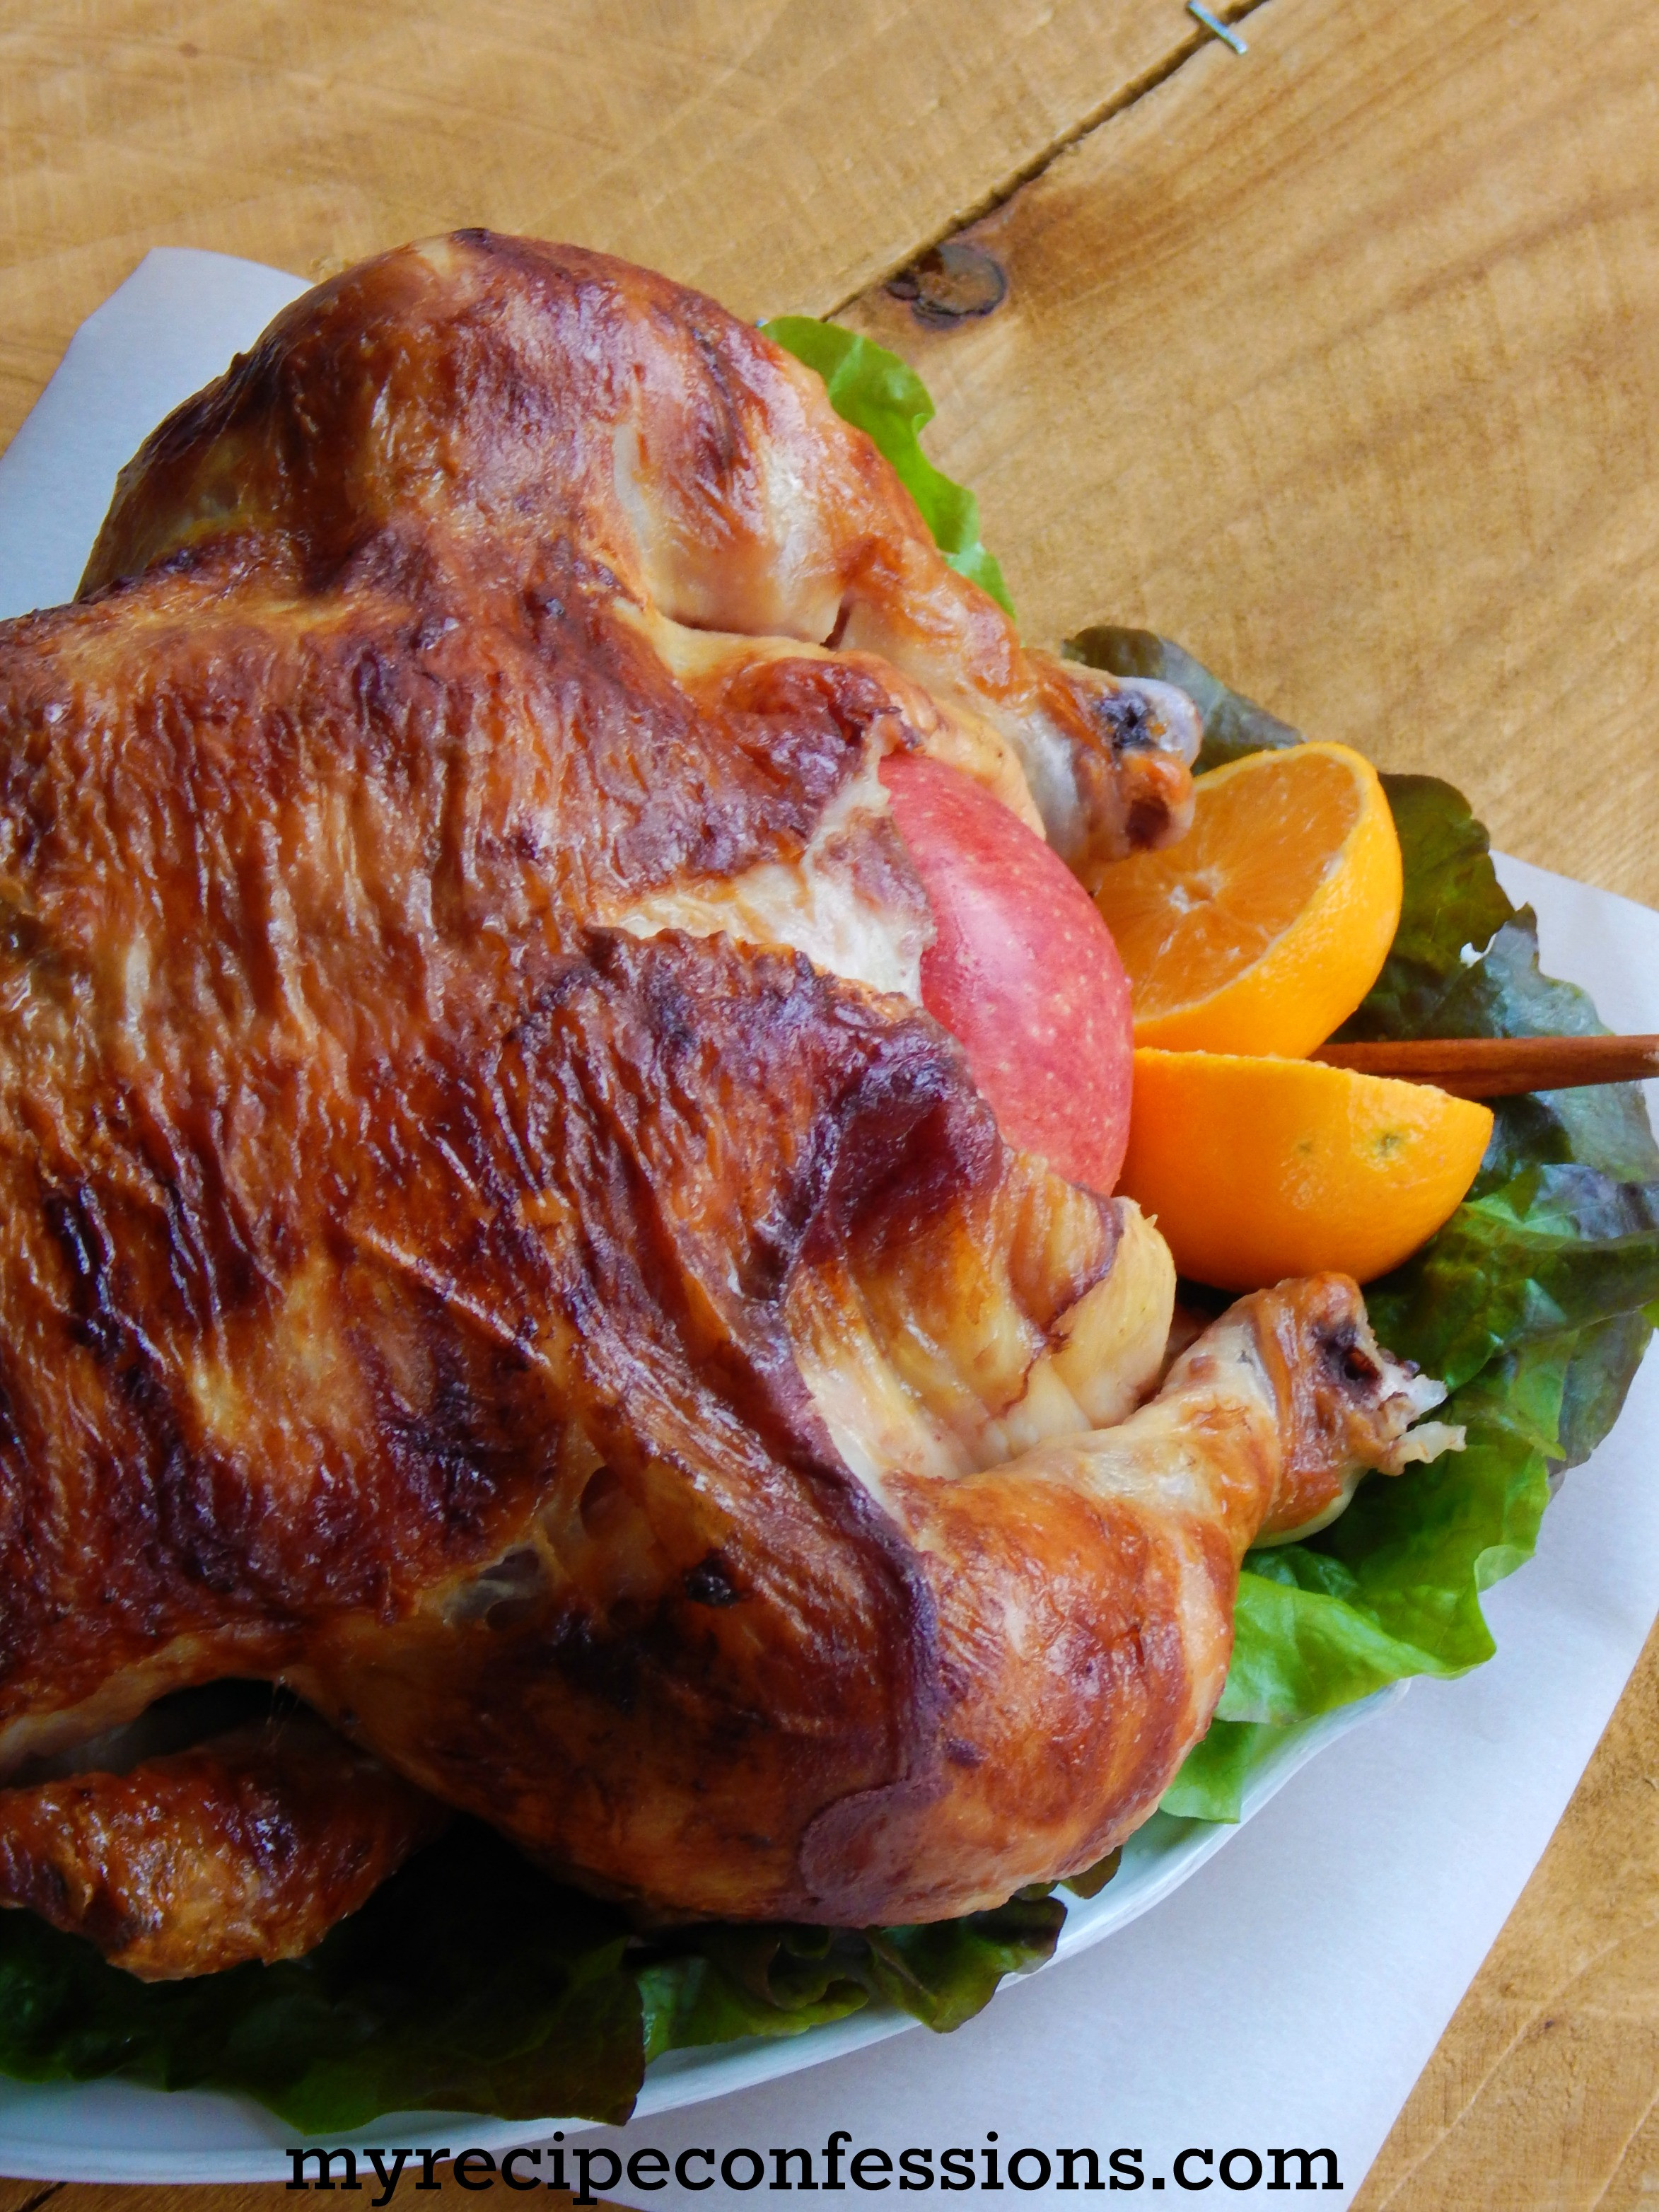 Brining Turkey Recipes Thanksgiving
 How to Brine A Turkey My Recipe Confessions